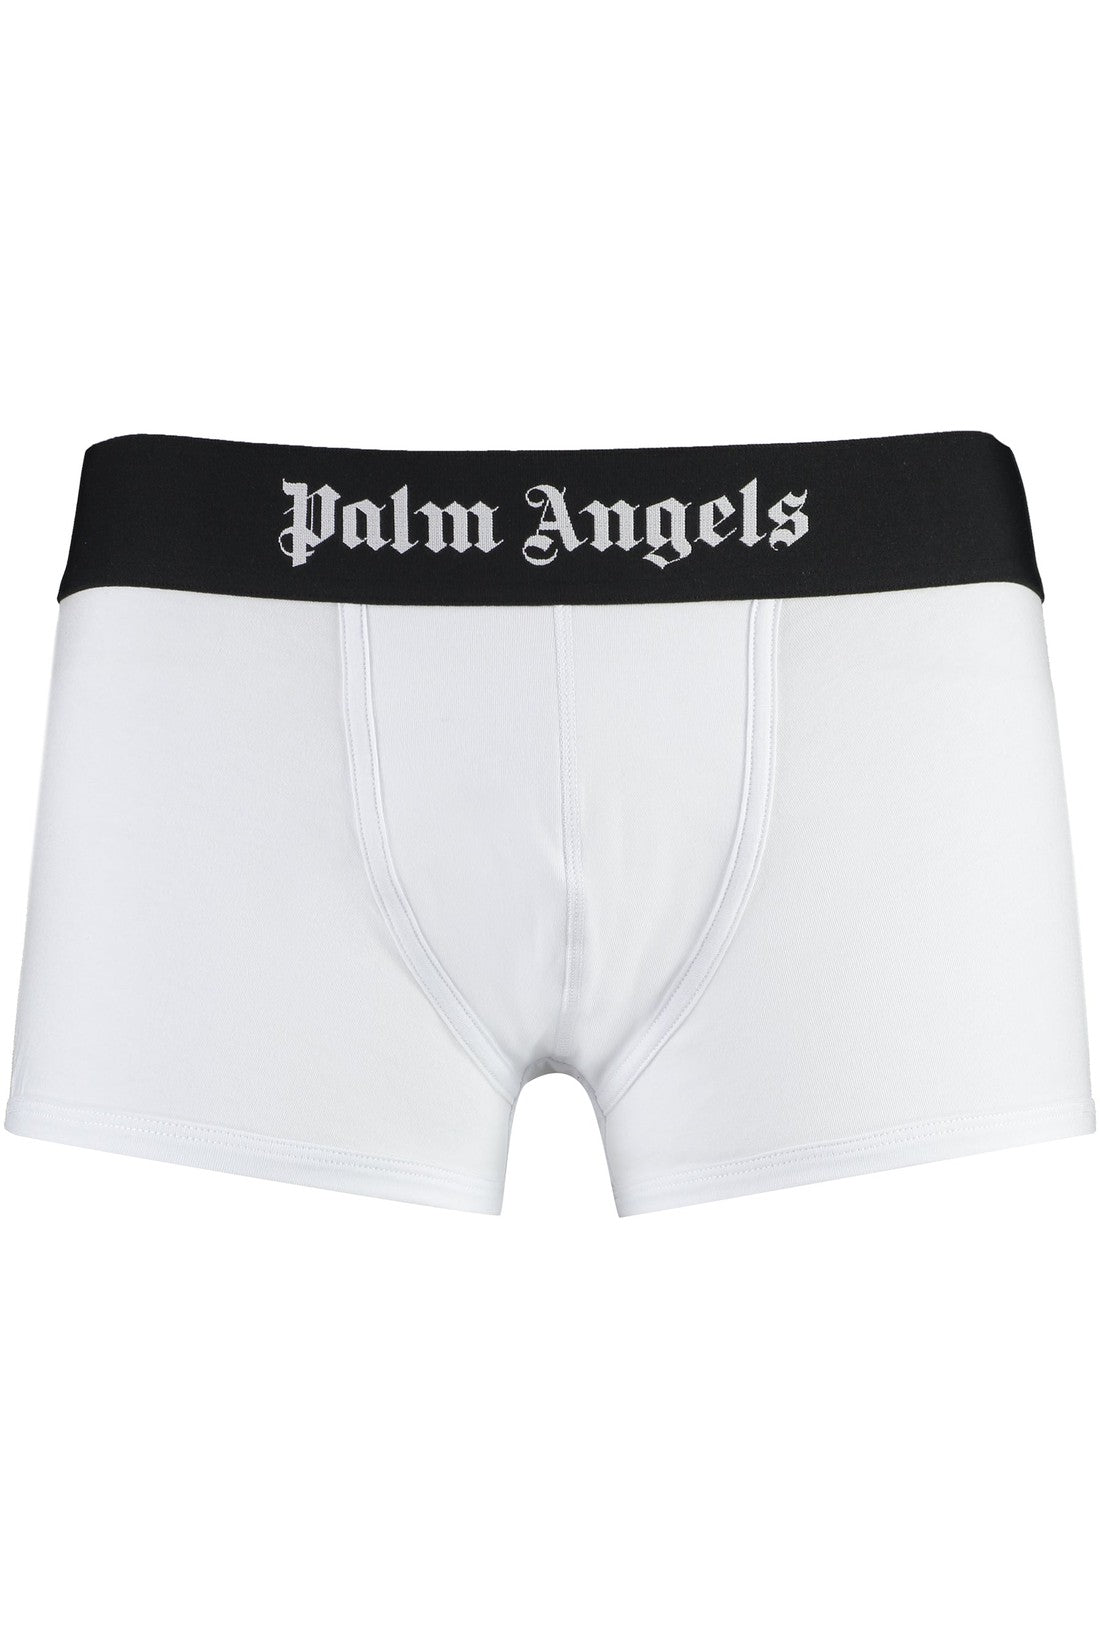 Palm Angels-OUTLET-SALE-Set of two cotton boxers-ARCHIVIST